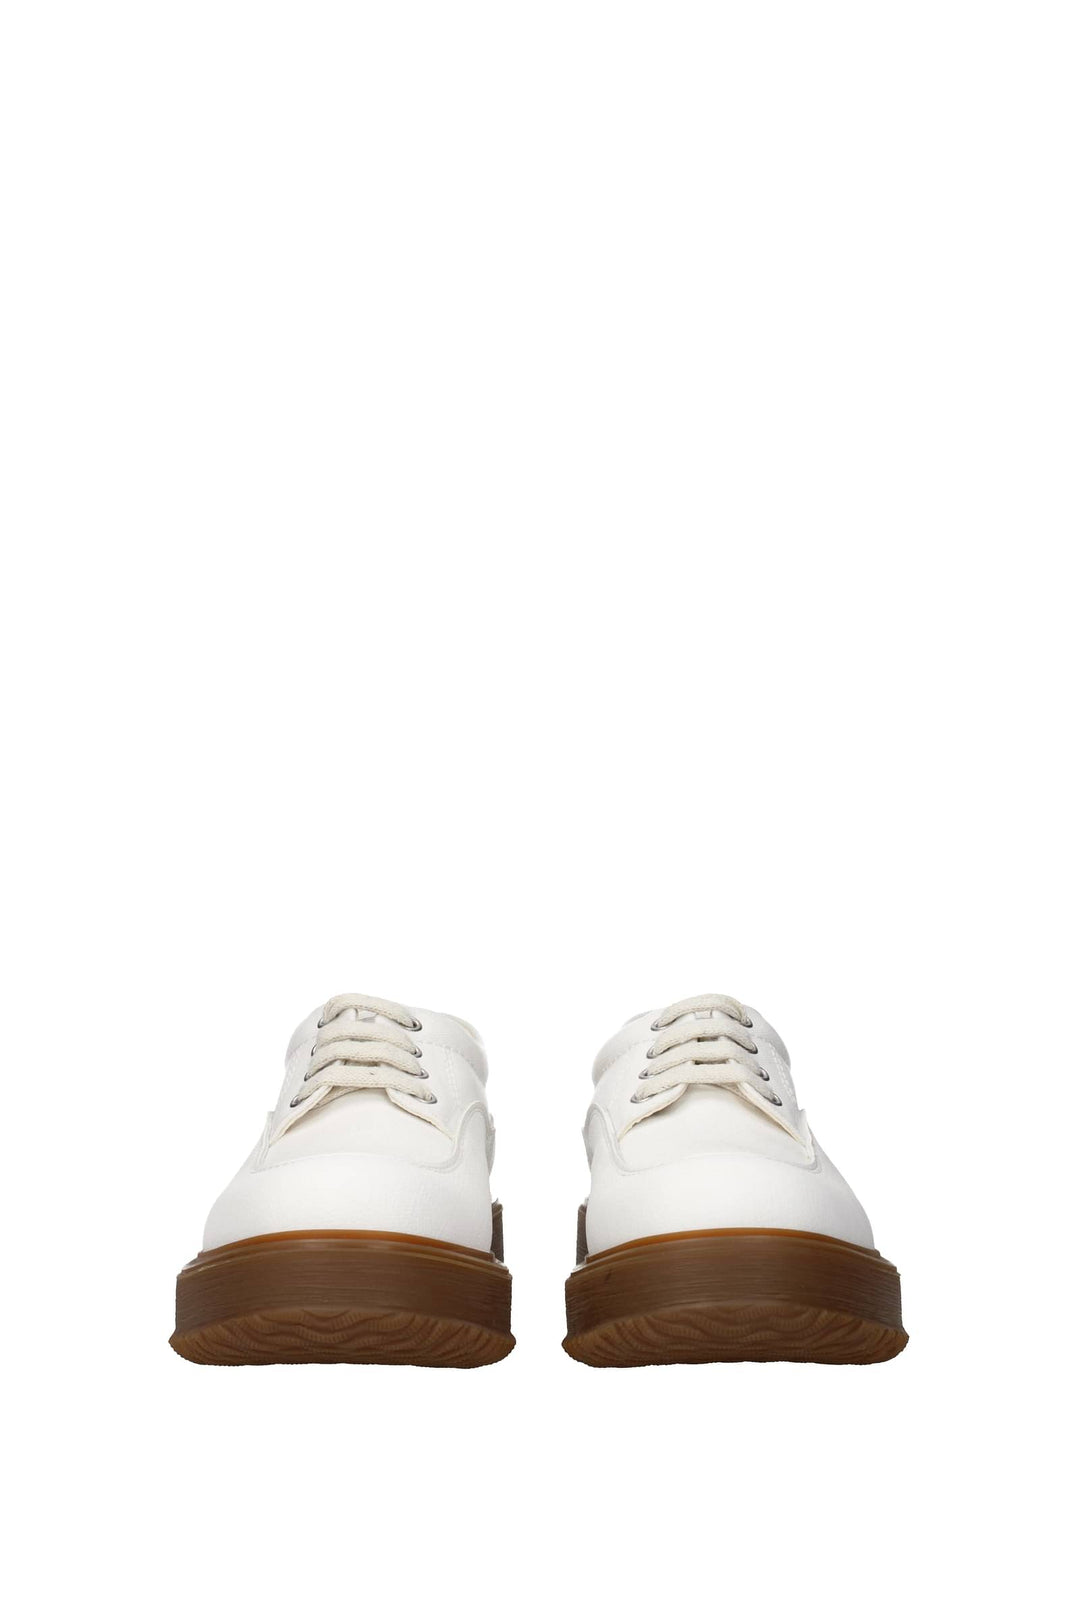 Sneakers Tessuto Bianco - Hogan - Donna